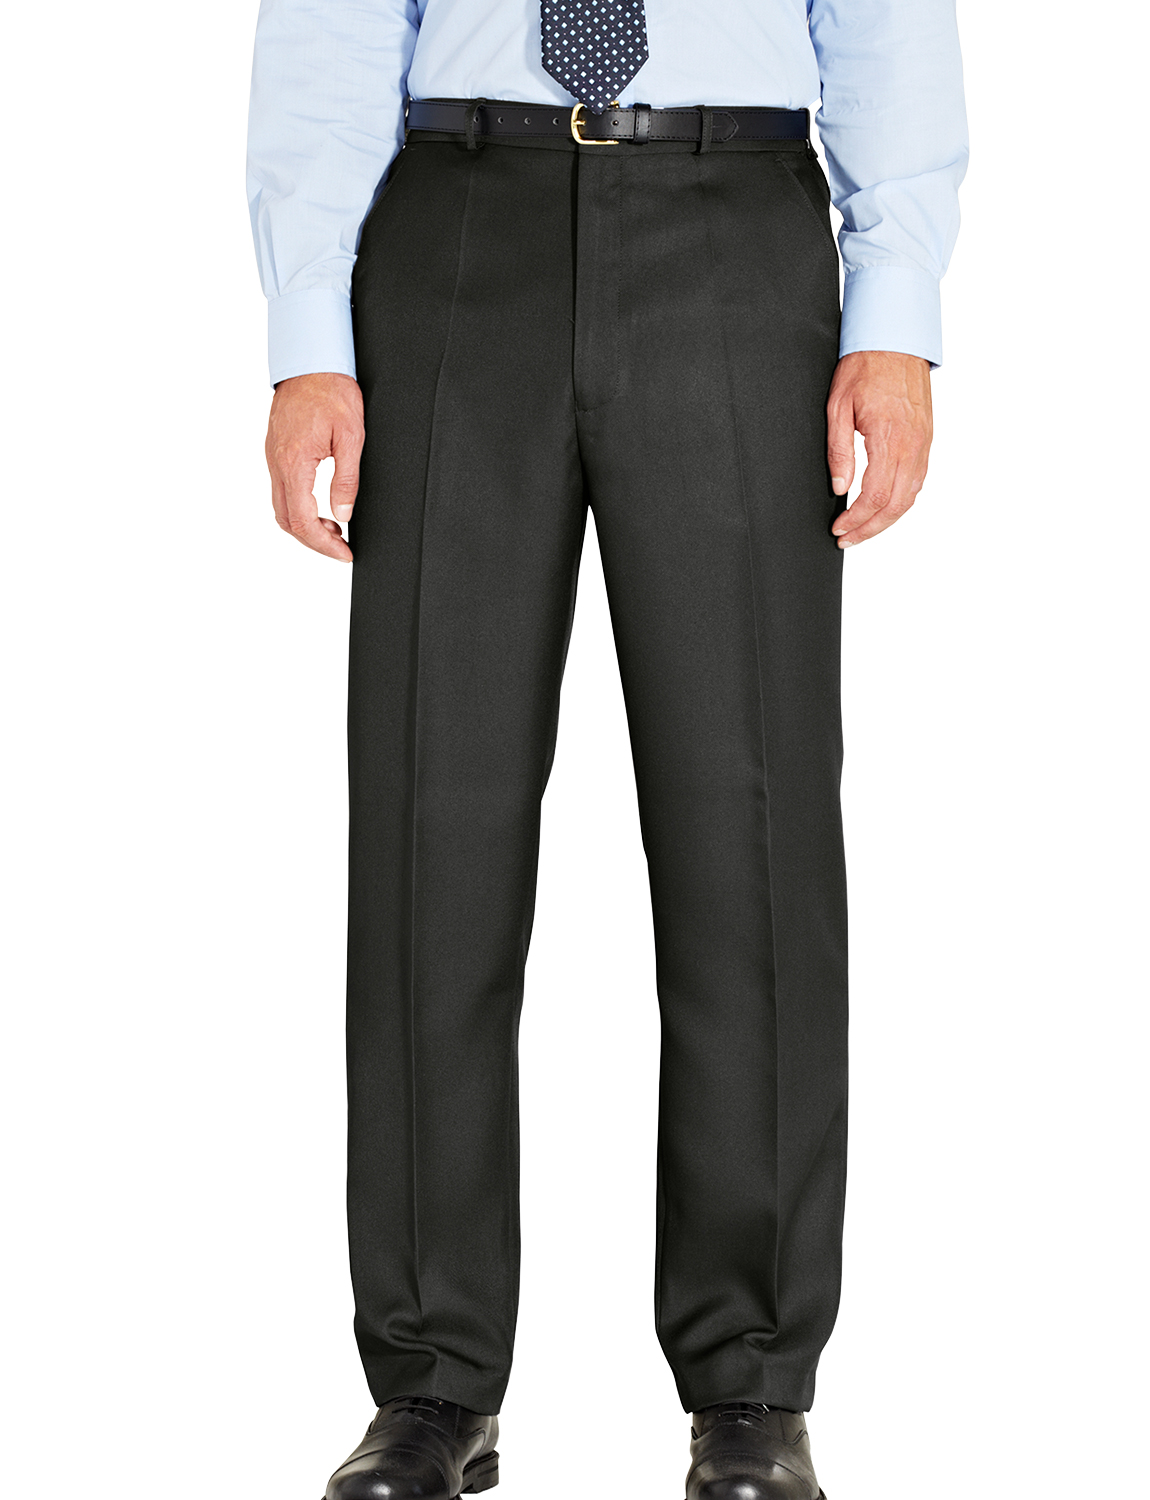 Mens Quality Formal Elasticated Trouser Pants | eBay